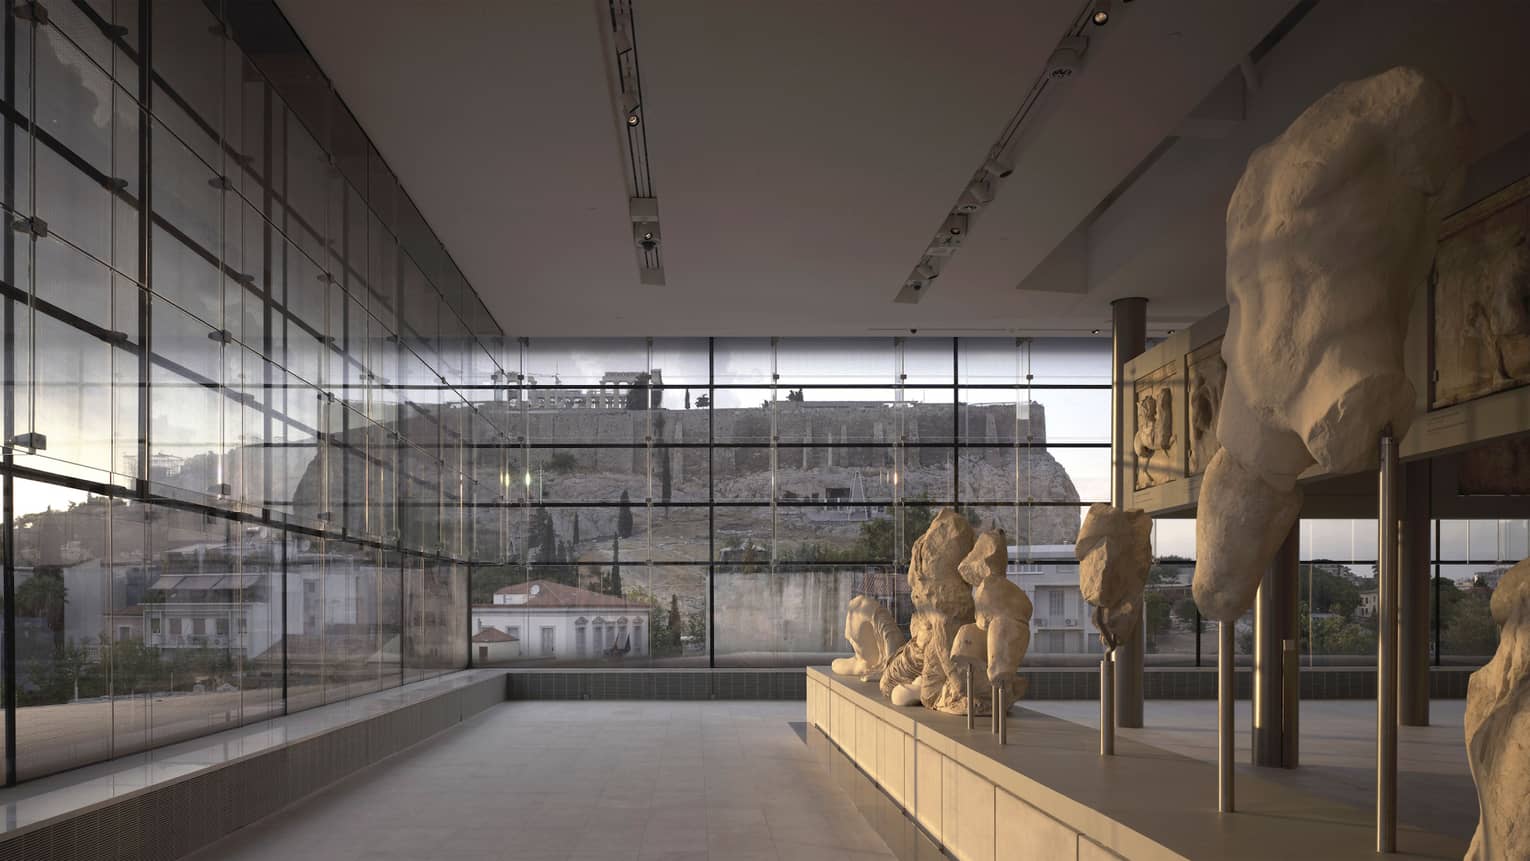 Greek sculptures on display in glass room overlooking ruins at Acropolis Museum